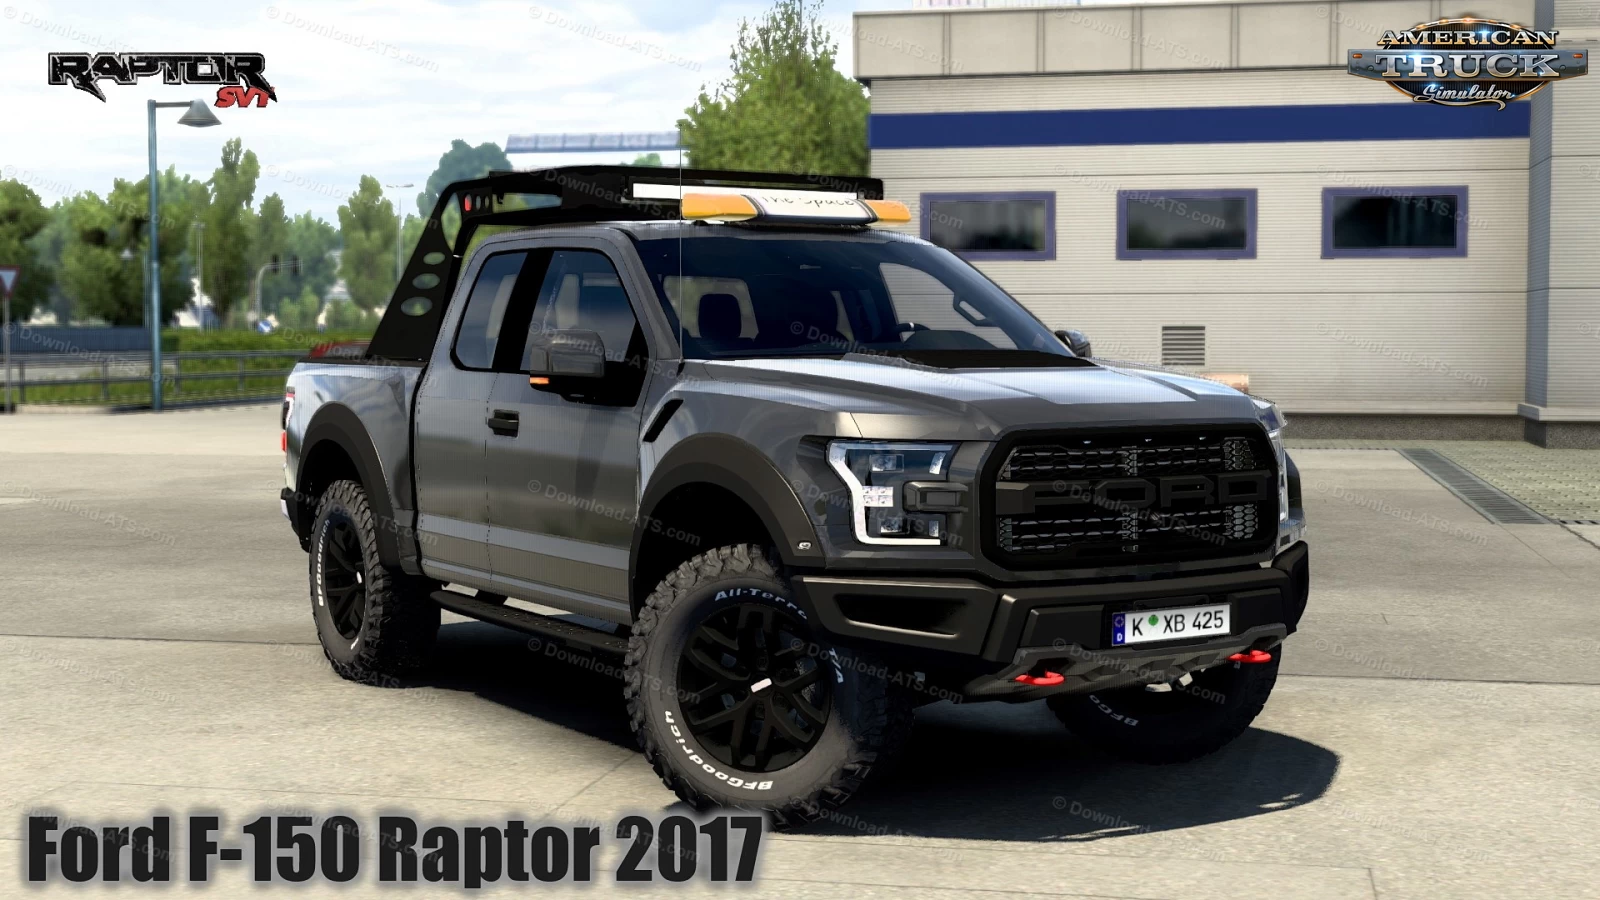 Ford F-150 Raptor 2017 + Interior v2.2 (1.47.x) for ATS